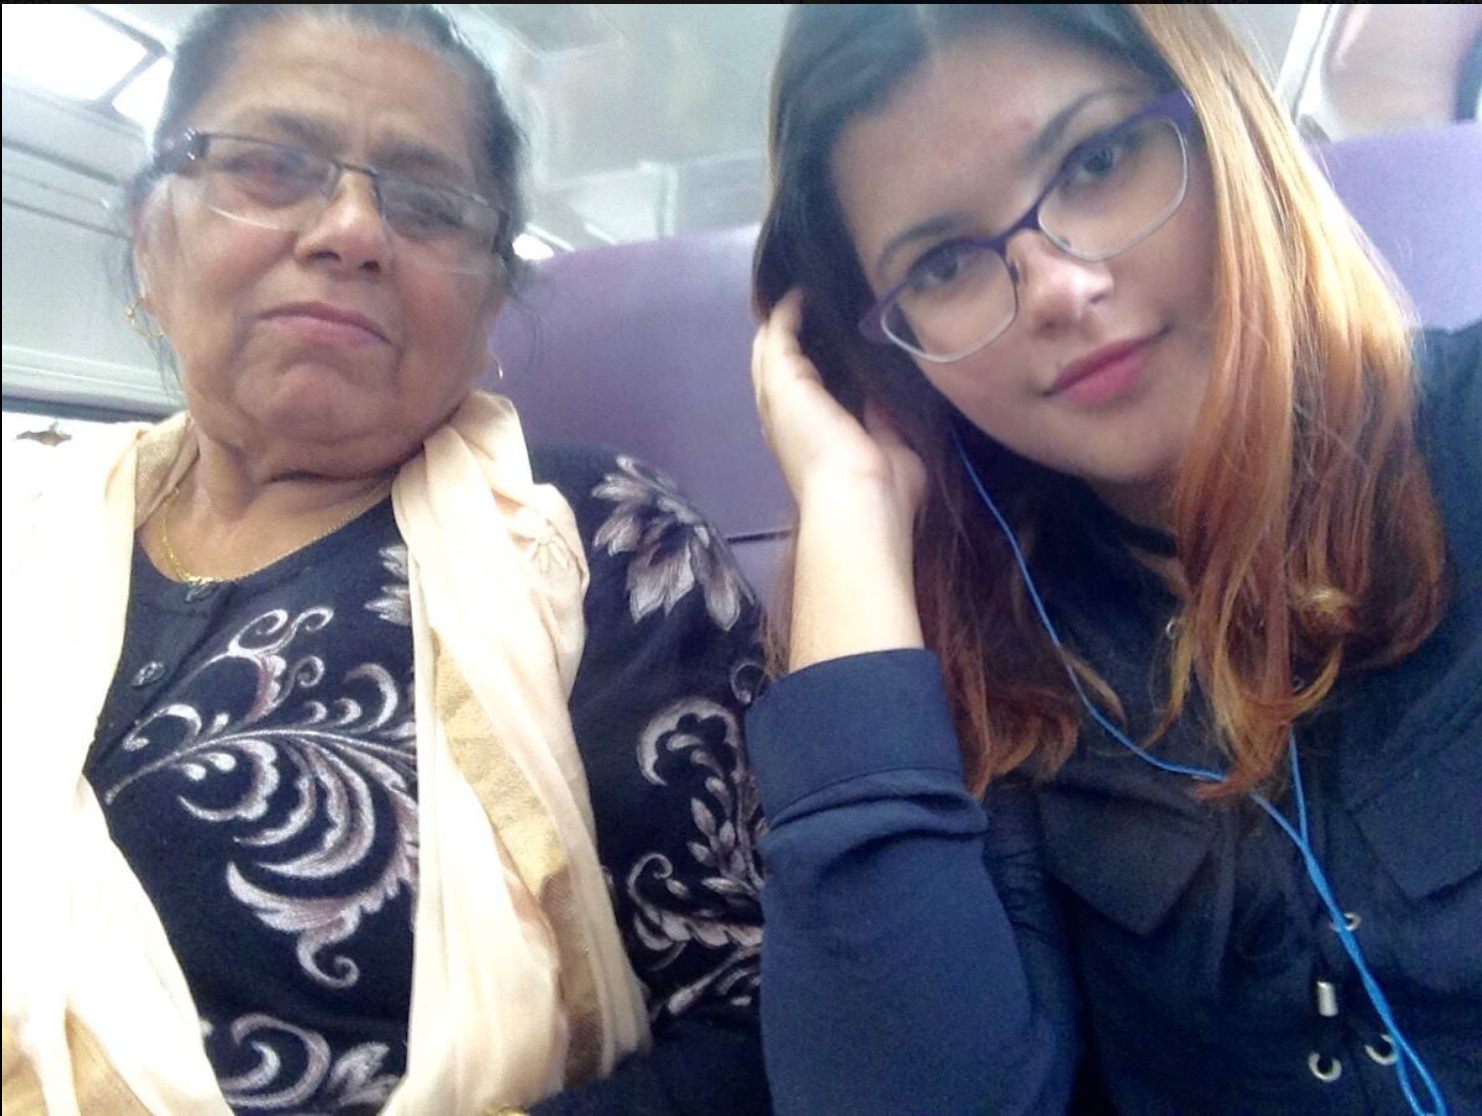 Aama and Nanu on the train en route Broadmeadow - Sydney.